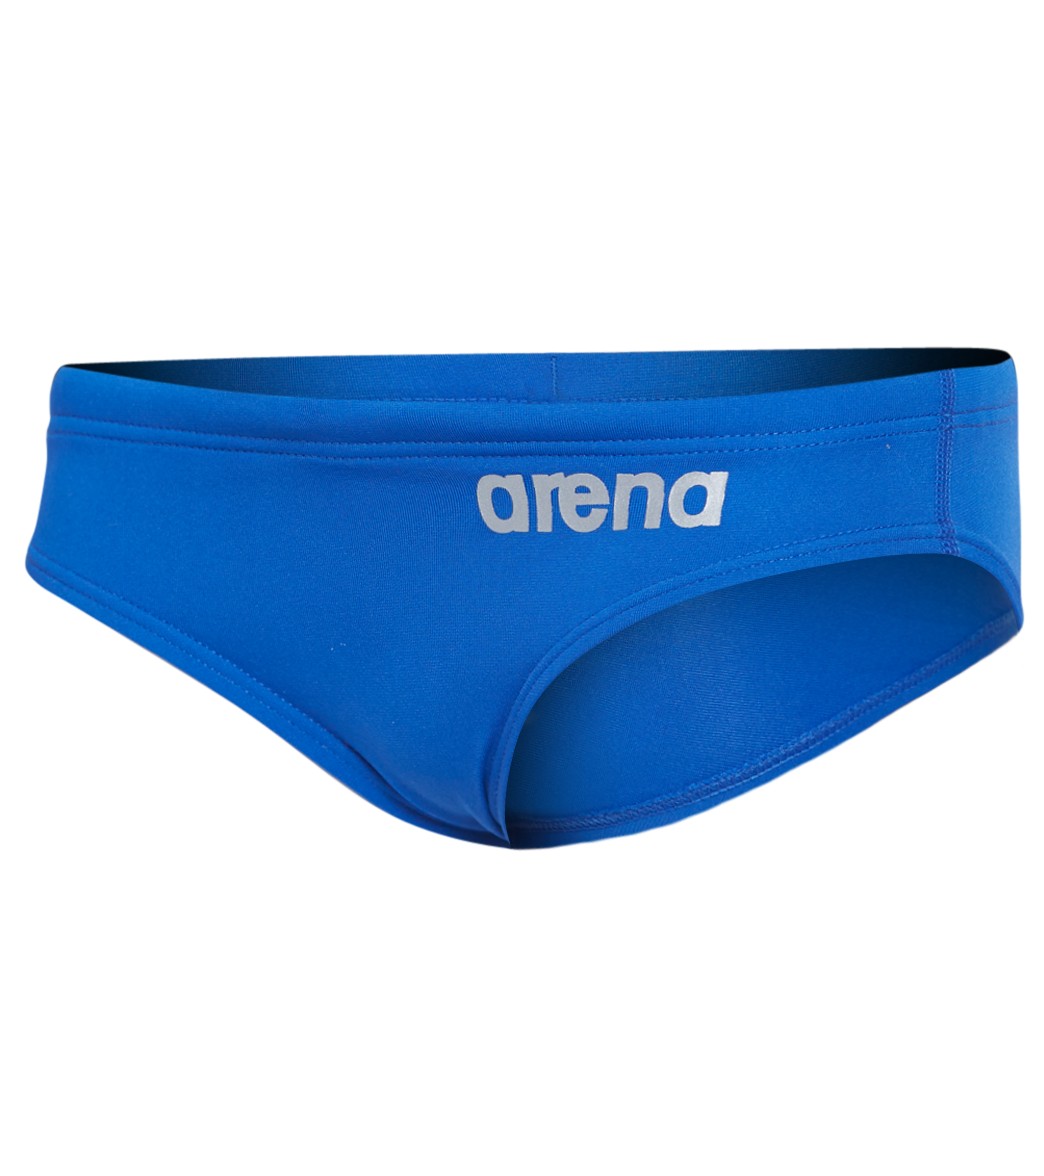 Arena Boys' Skys Swim Brief Swimsuit at SwimOutlet.com